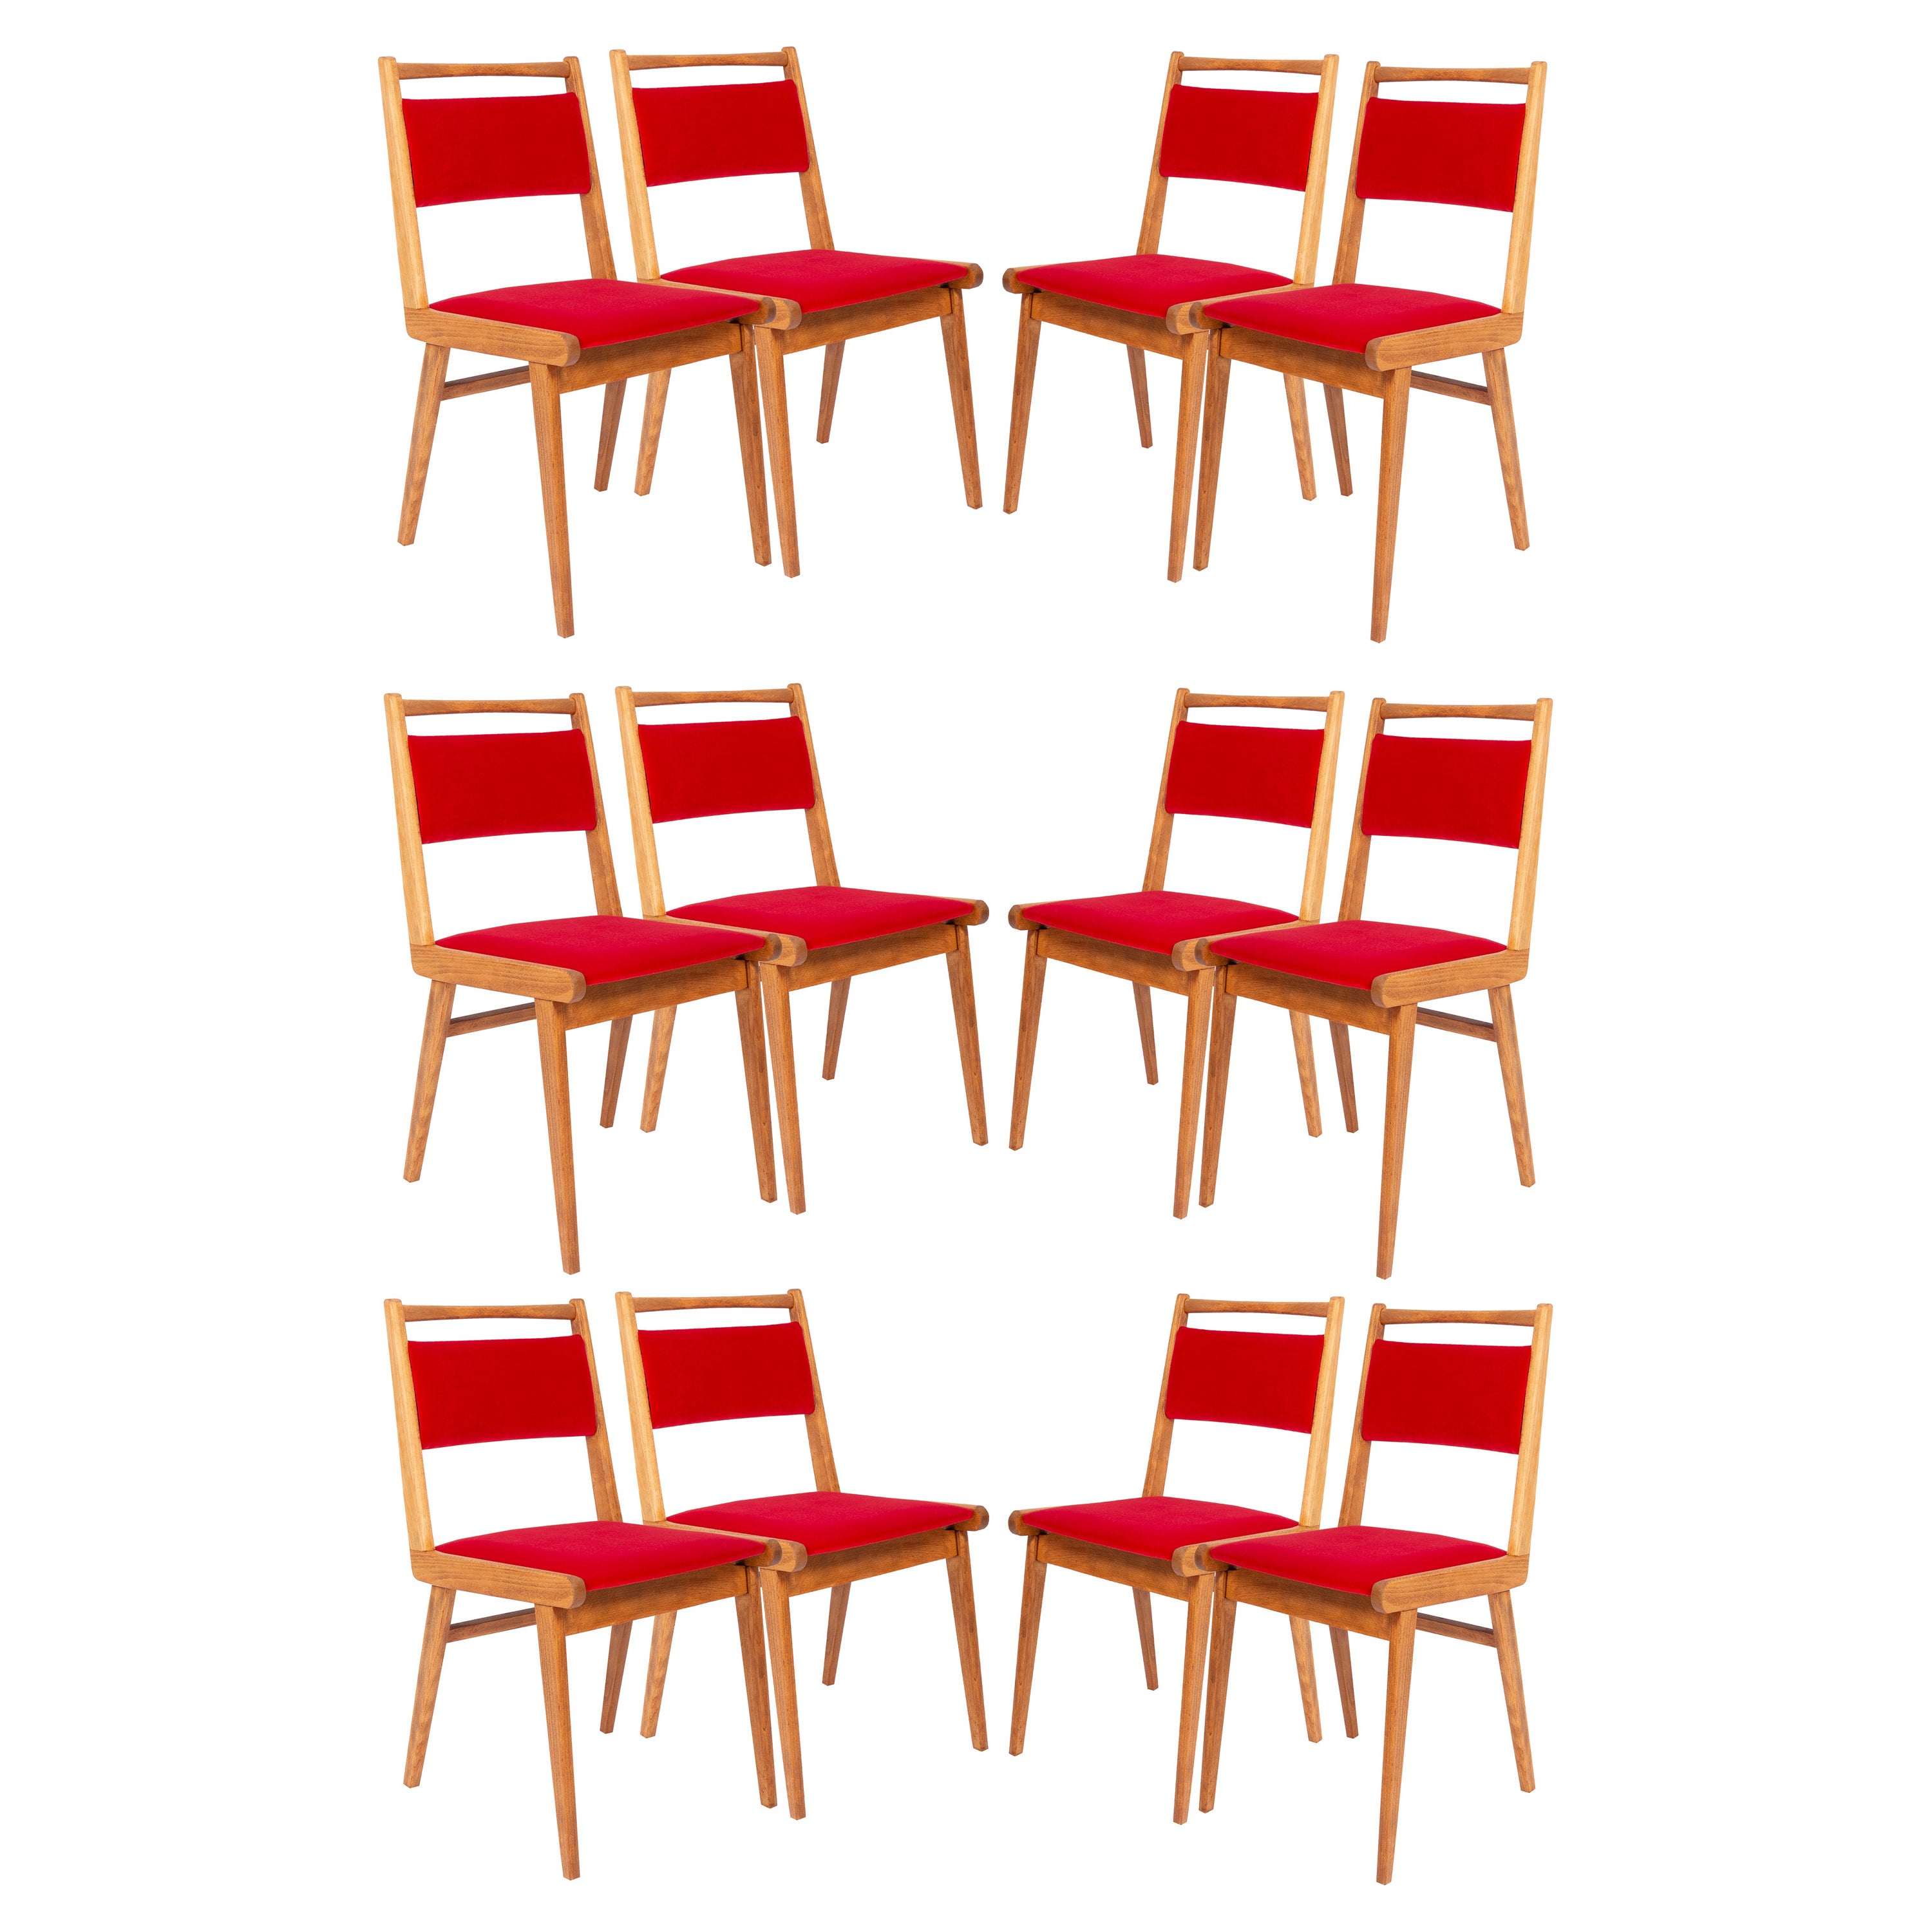 Set of Twelve 20th Century Red Velvet Chairs, by Rajmund Halas, Poland, 1960s For Sale